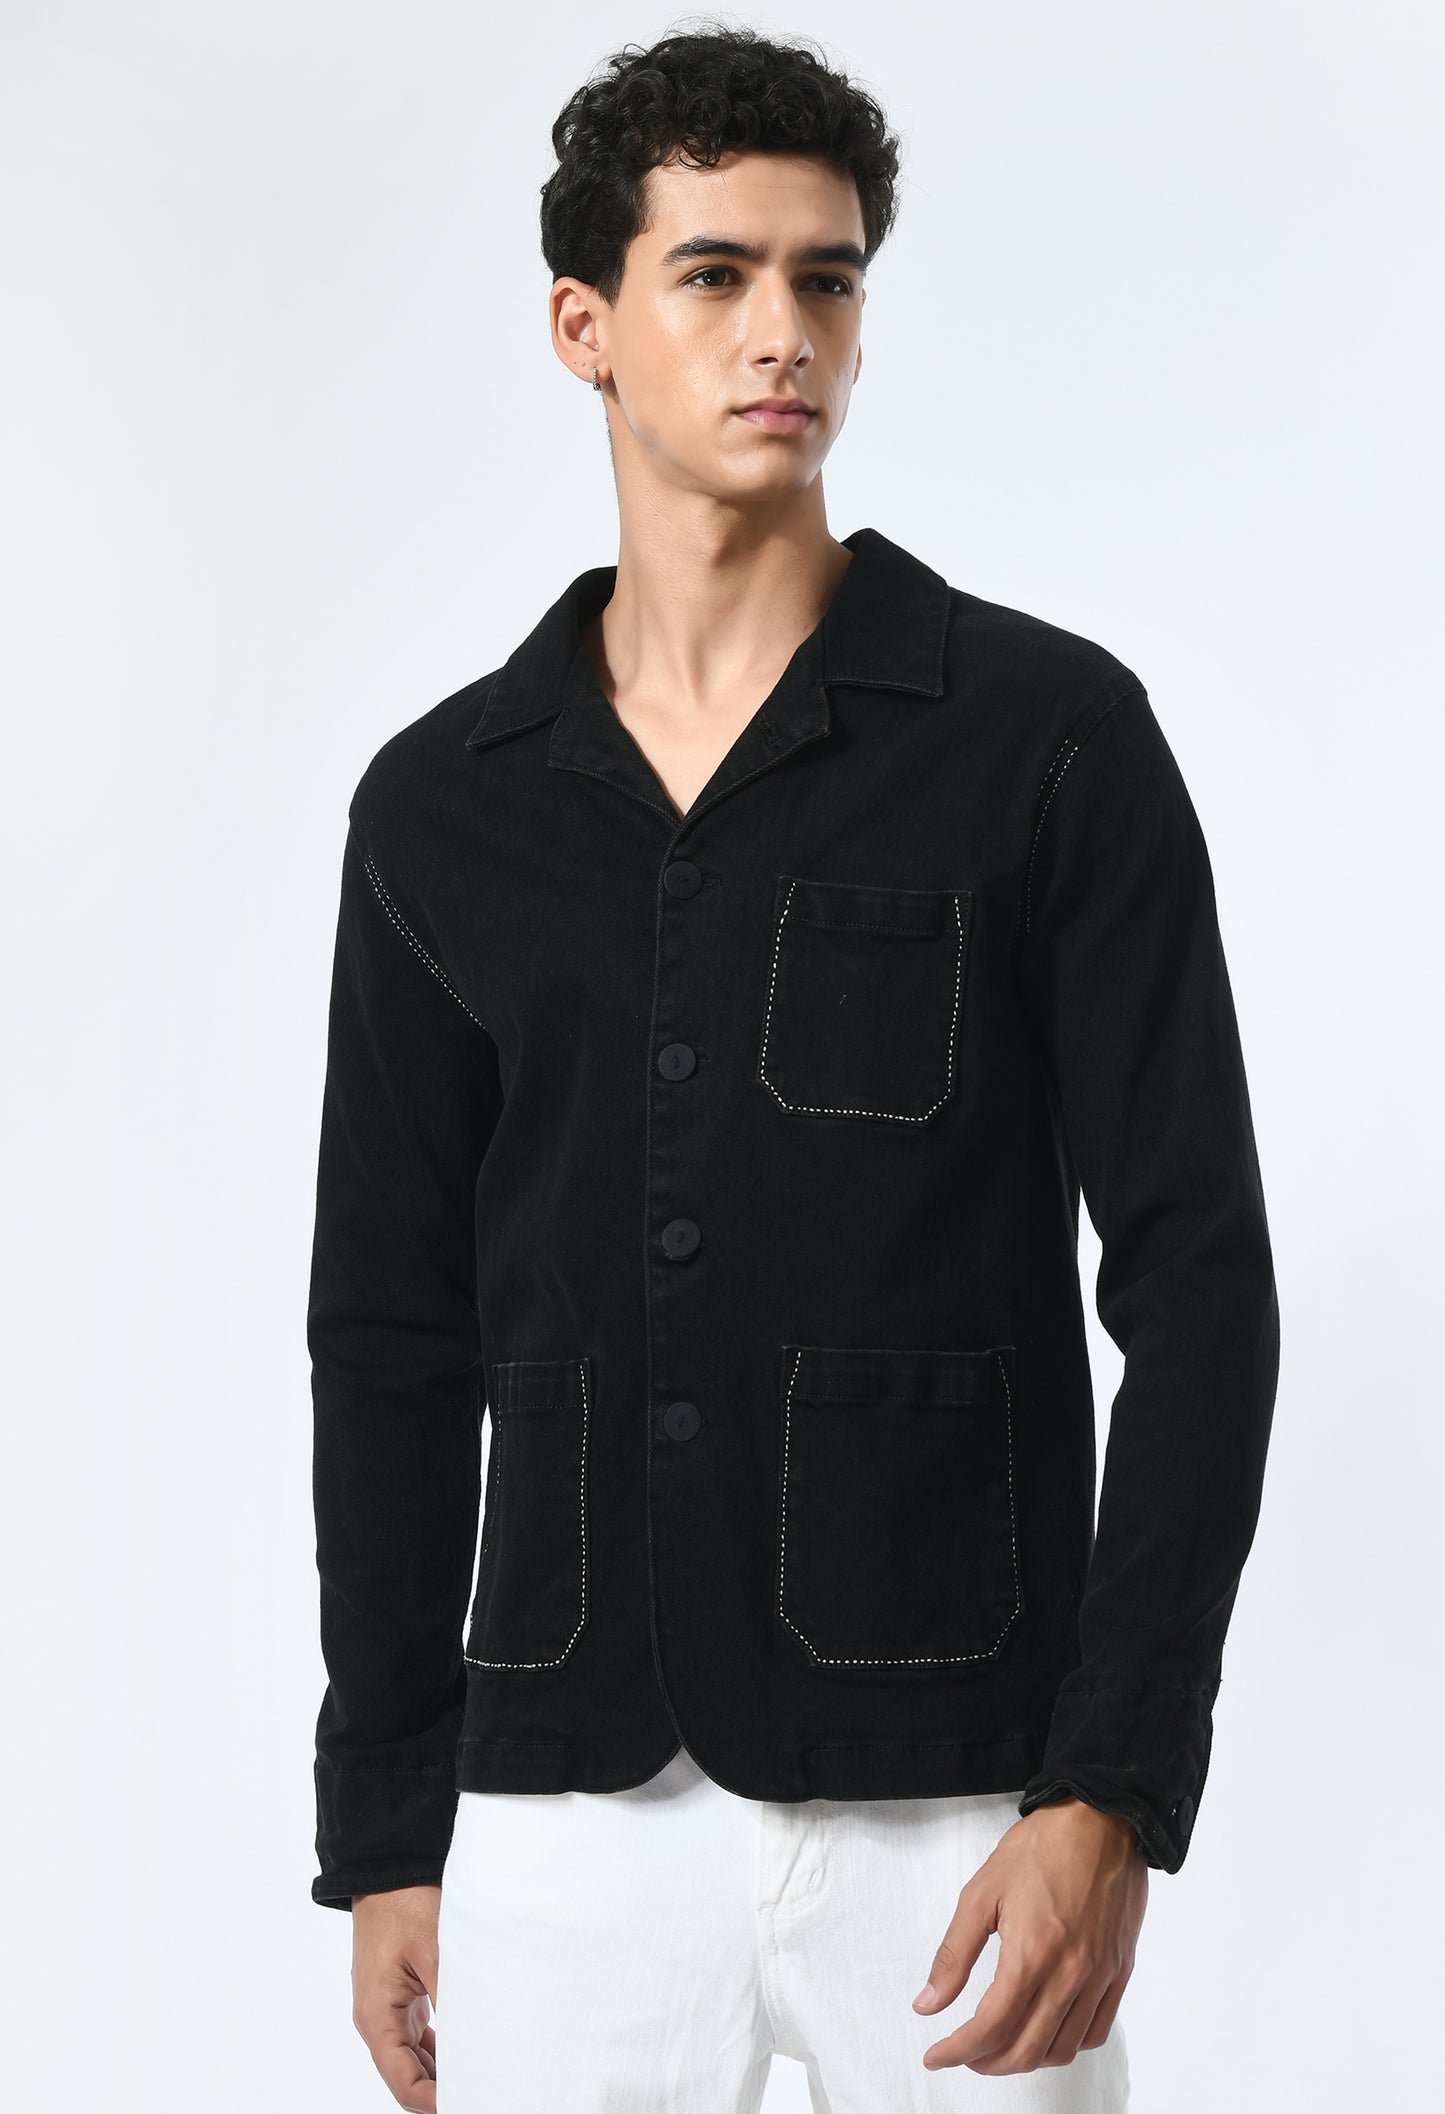 Men's classic blazer in sleek black